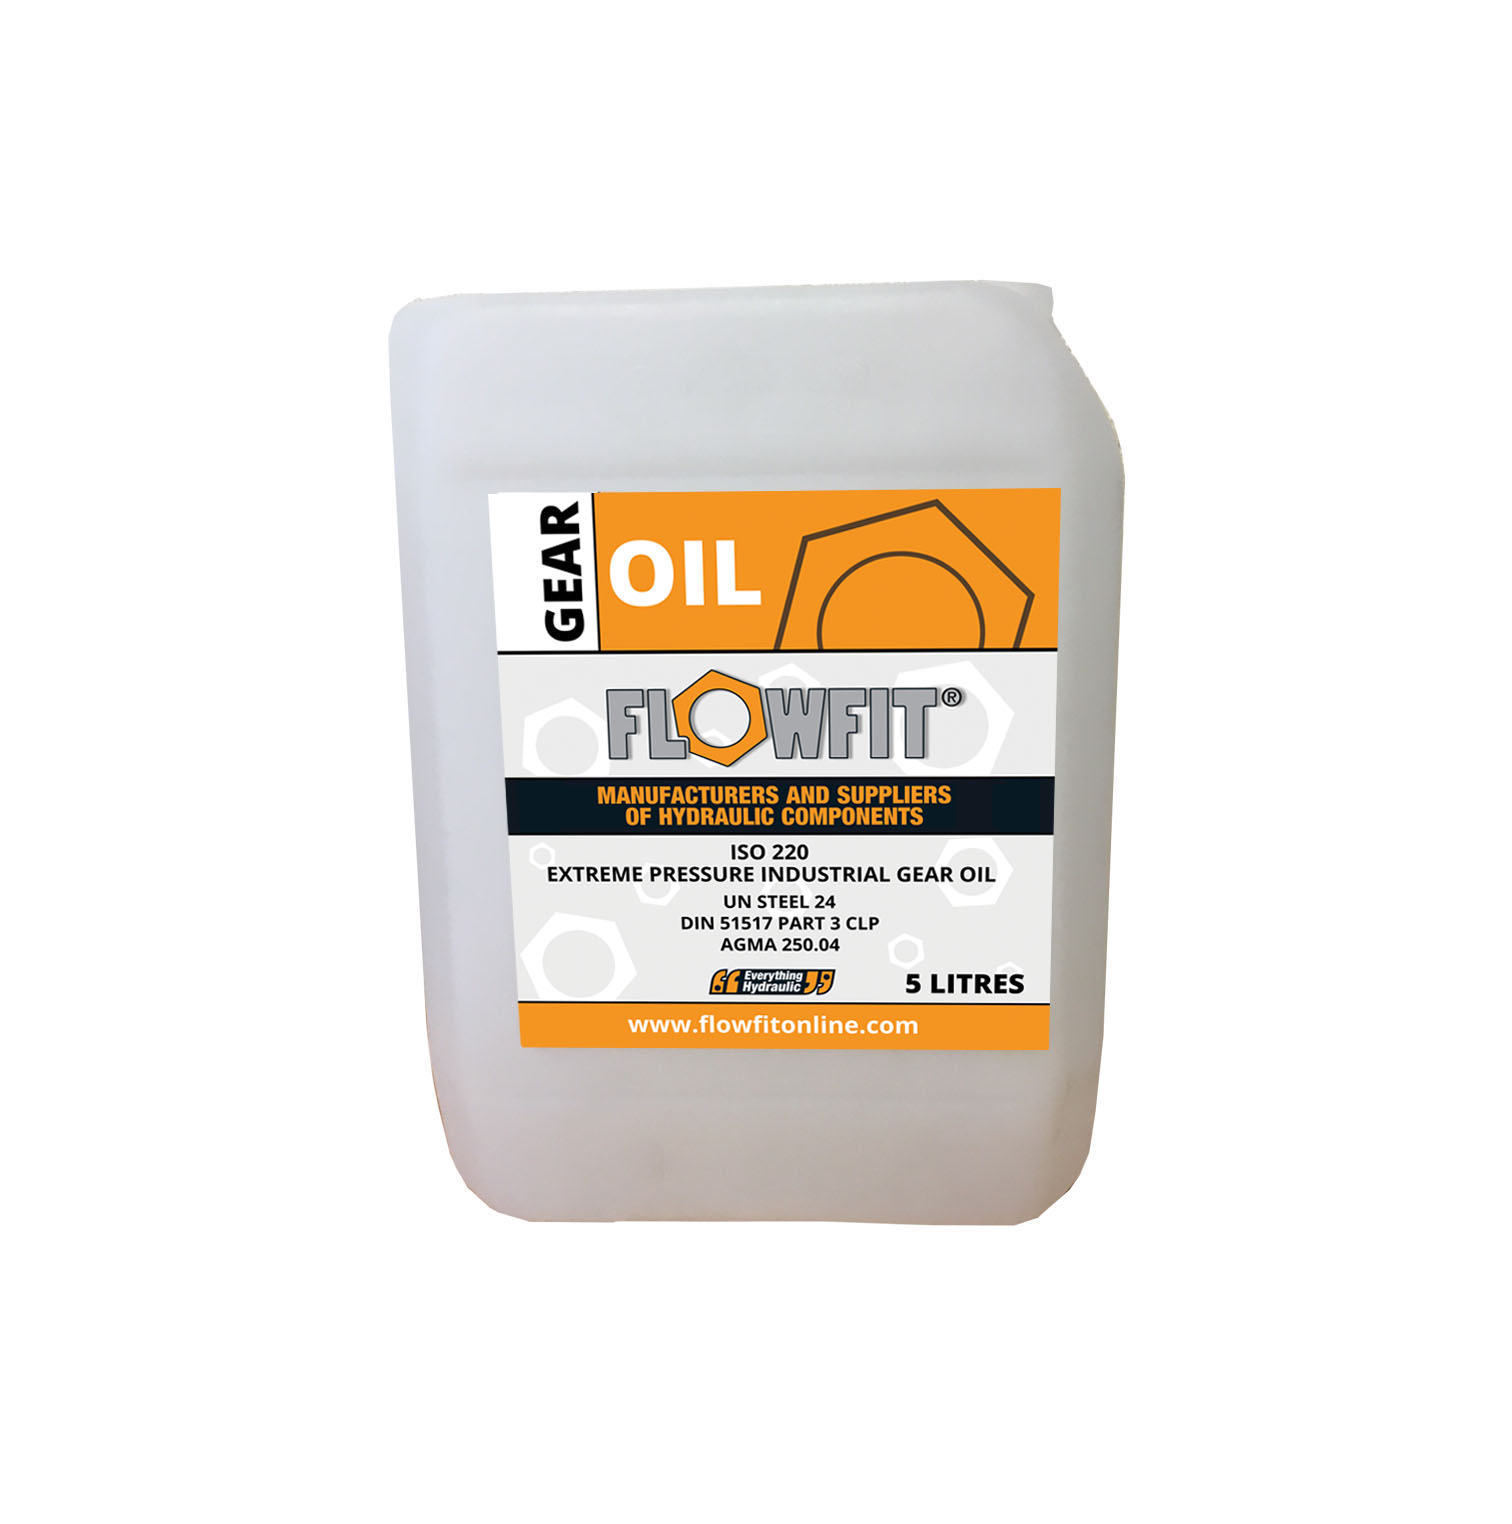 Flowfit Gear Oil, ISO 220, 5 Litres